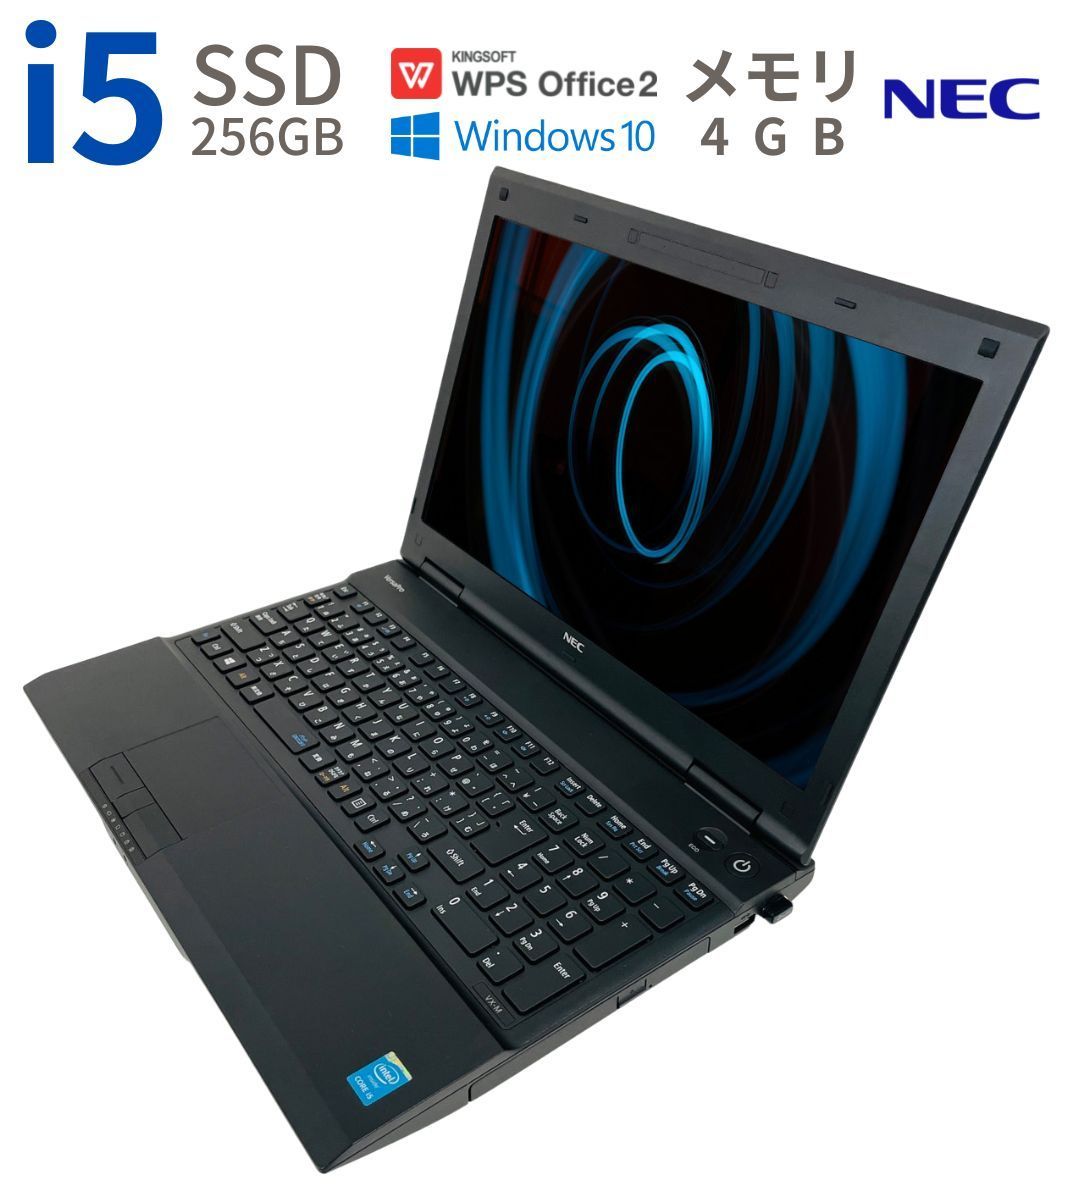 NEC ノートパソコン SSD搭載 テンキー有 初期設定済み Office付 - メルカリ